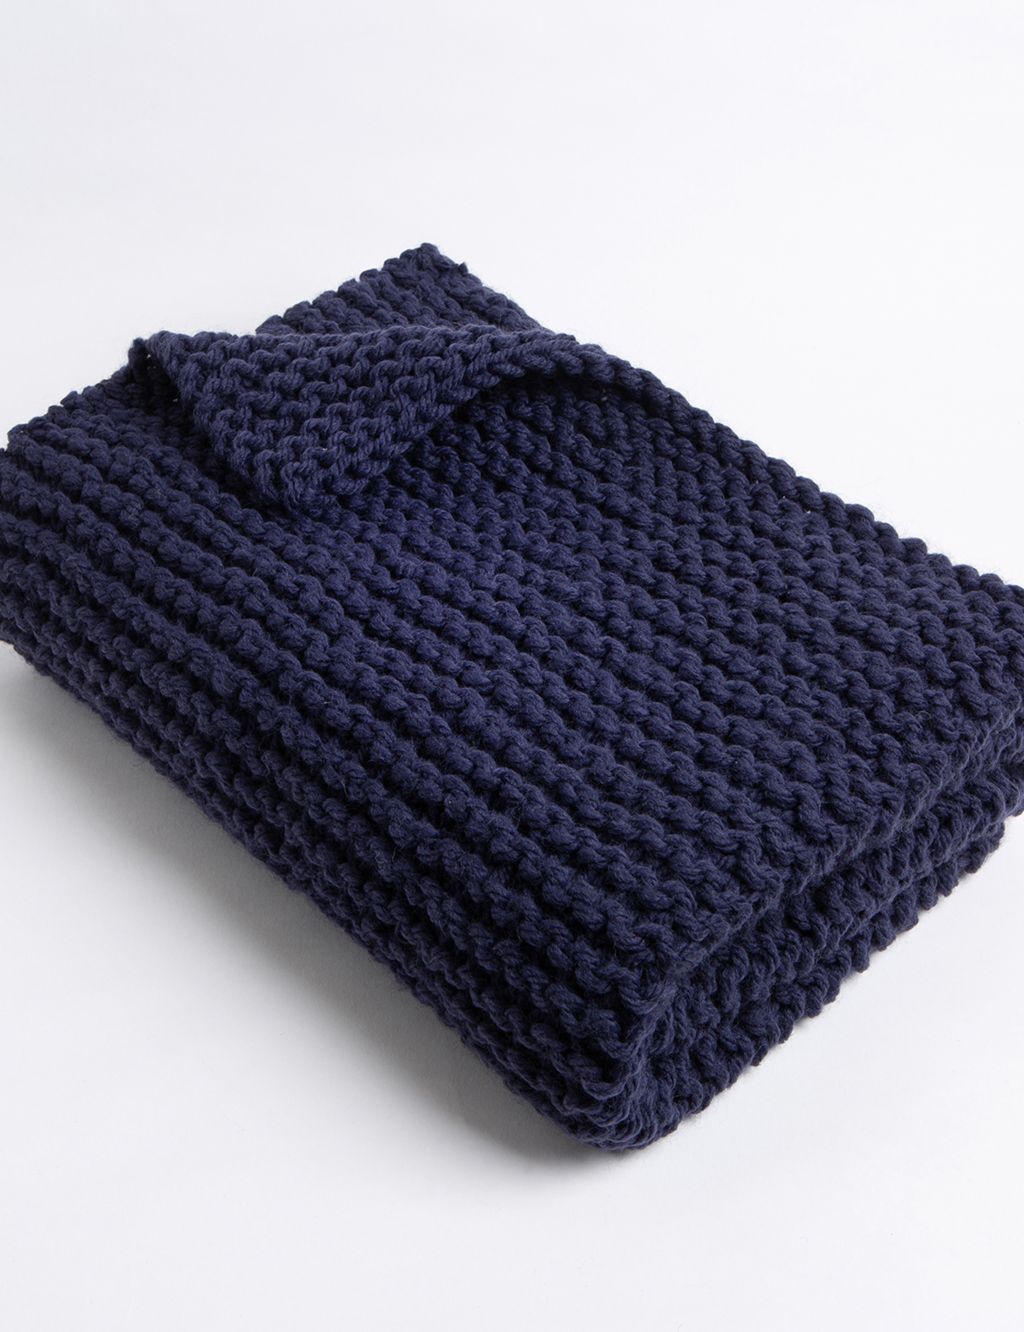 Garter Stitch Blanket Knitting Kit 2 of 5